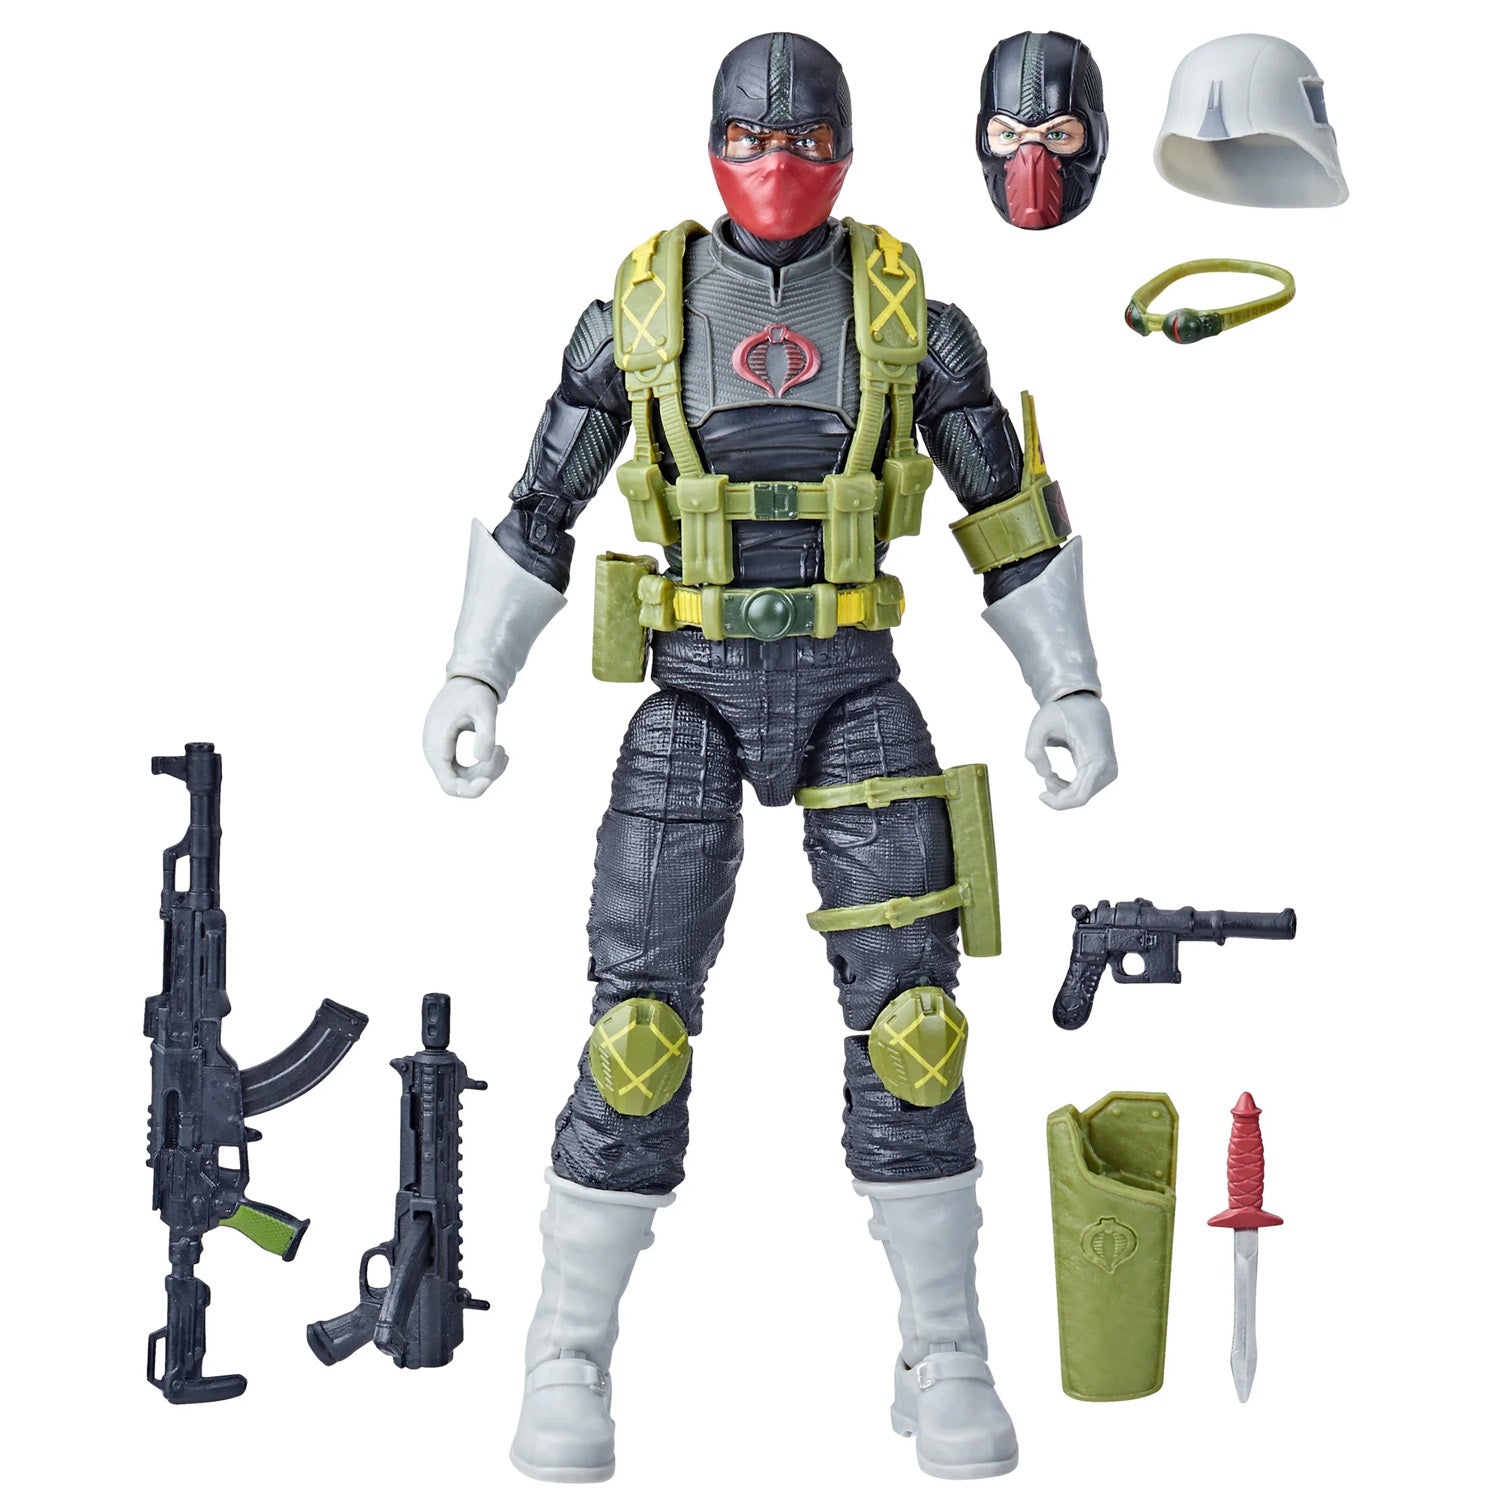 Hasbro - G.I. Joe Classified Series - Python Patrol Cobra Officer, 97 (6&quot;) - Marvelous Toys